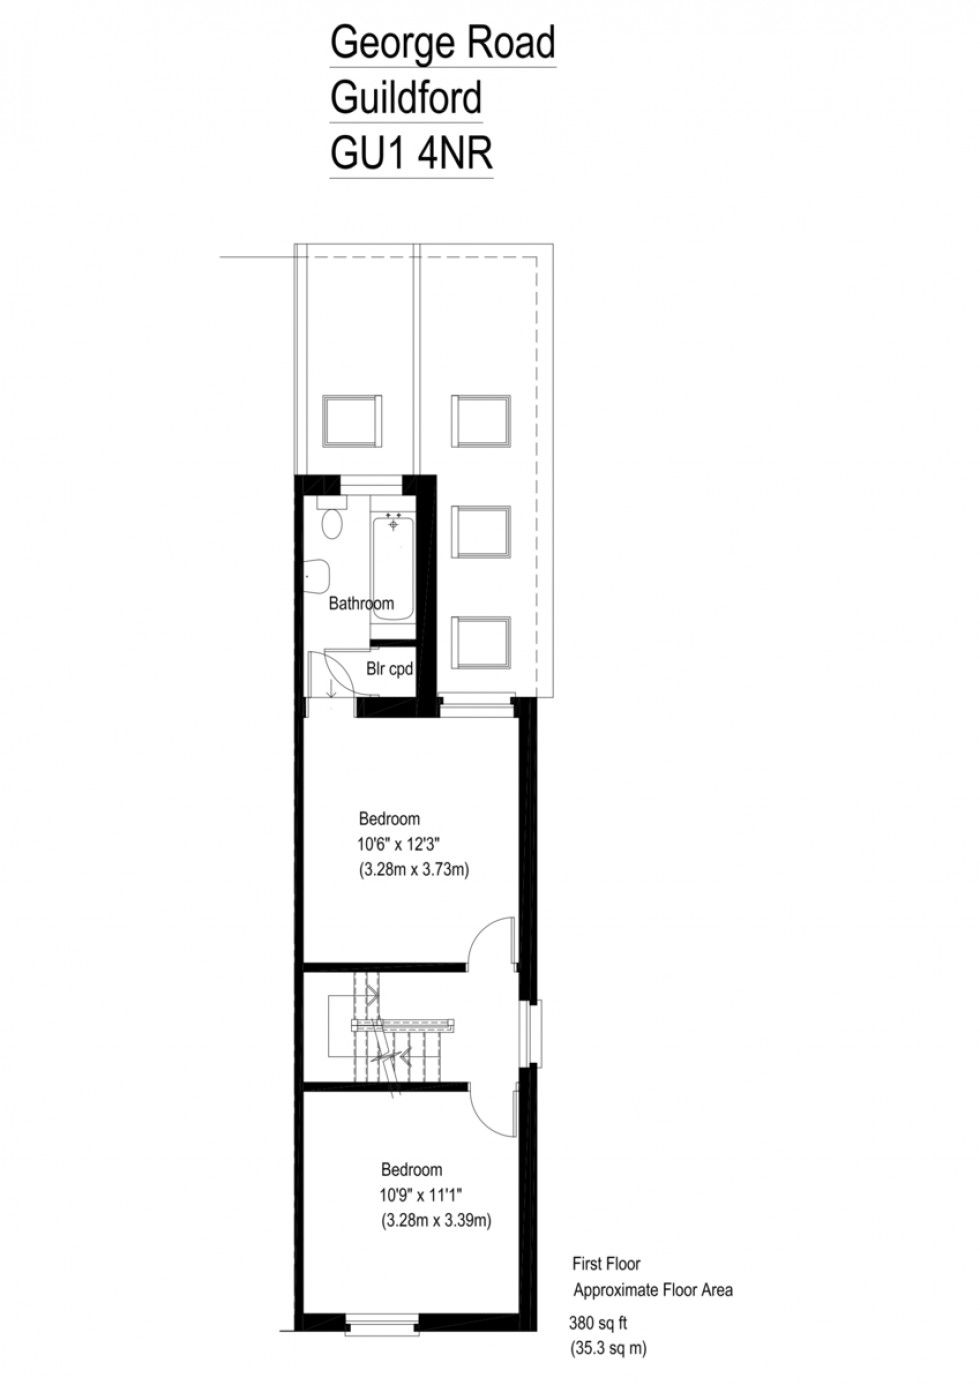 Floorplan for George Road, Guildford